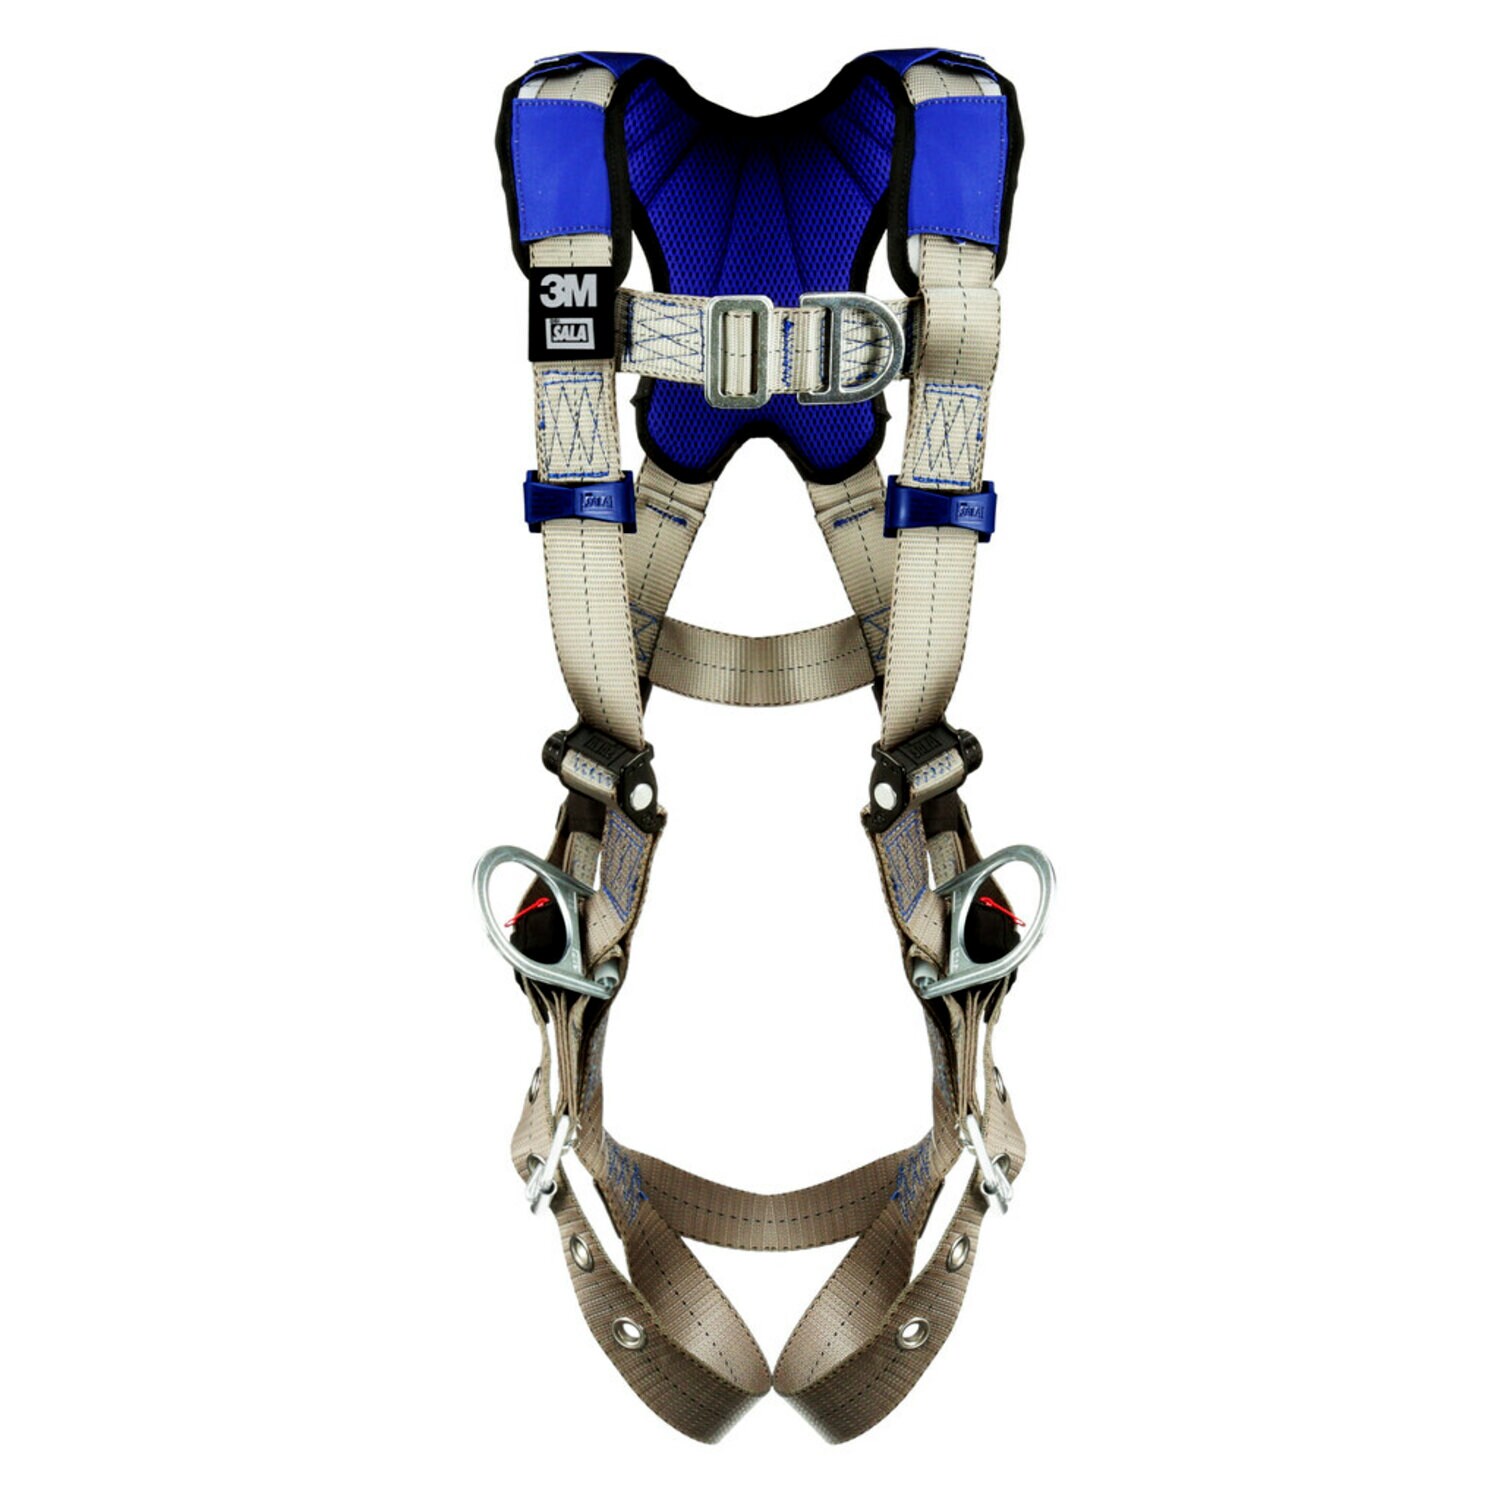 7012817461 - 3M DBI-SALA ExoFit X100 Comfort Vest Climbing/Positioning Safety Harness 1401016, Medium